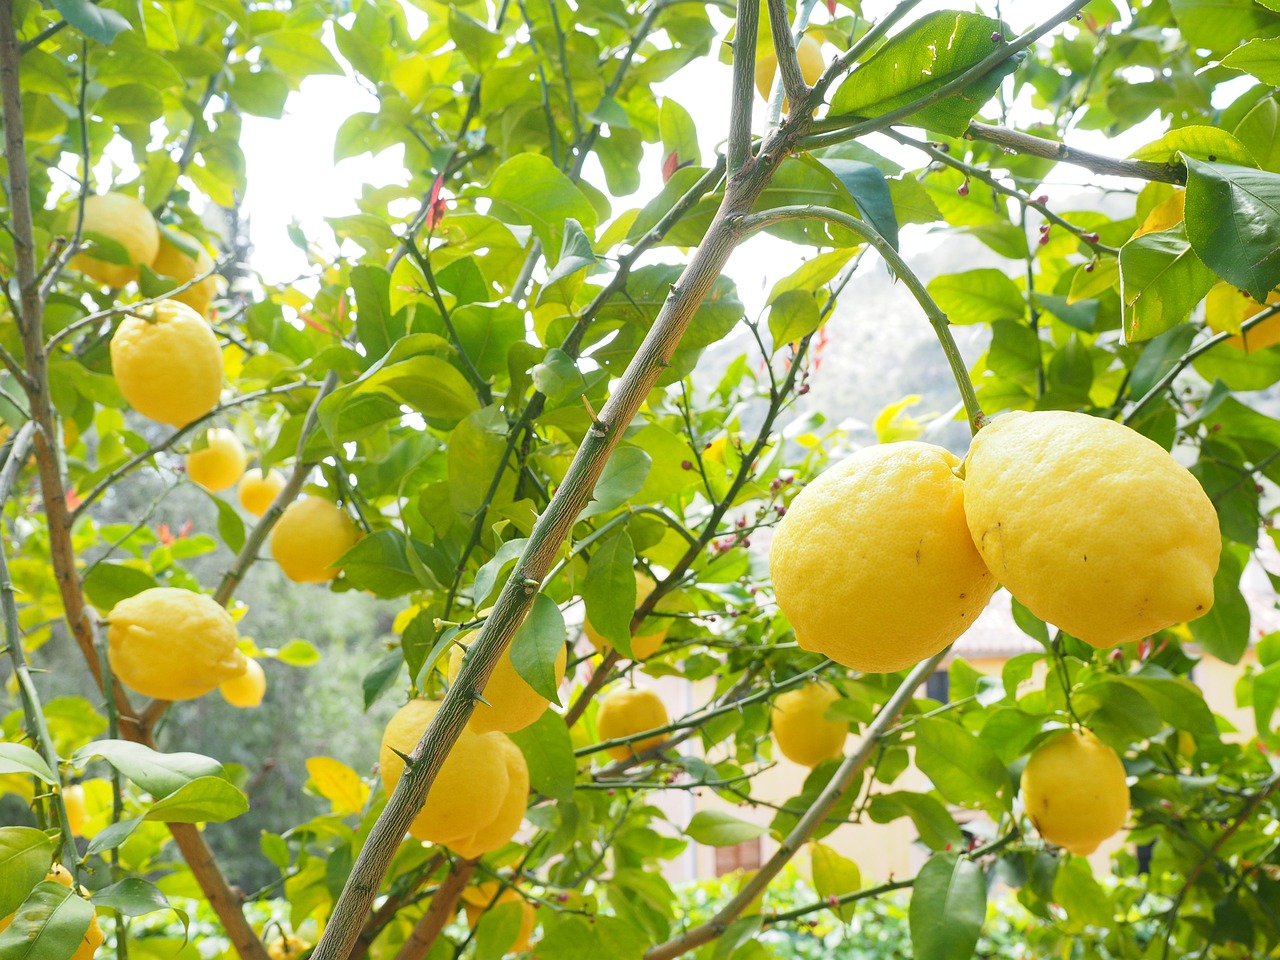 lemons hanging from trees